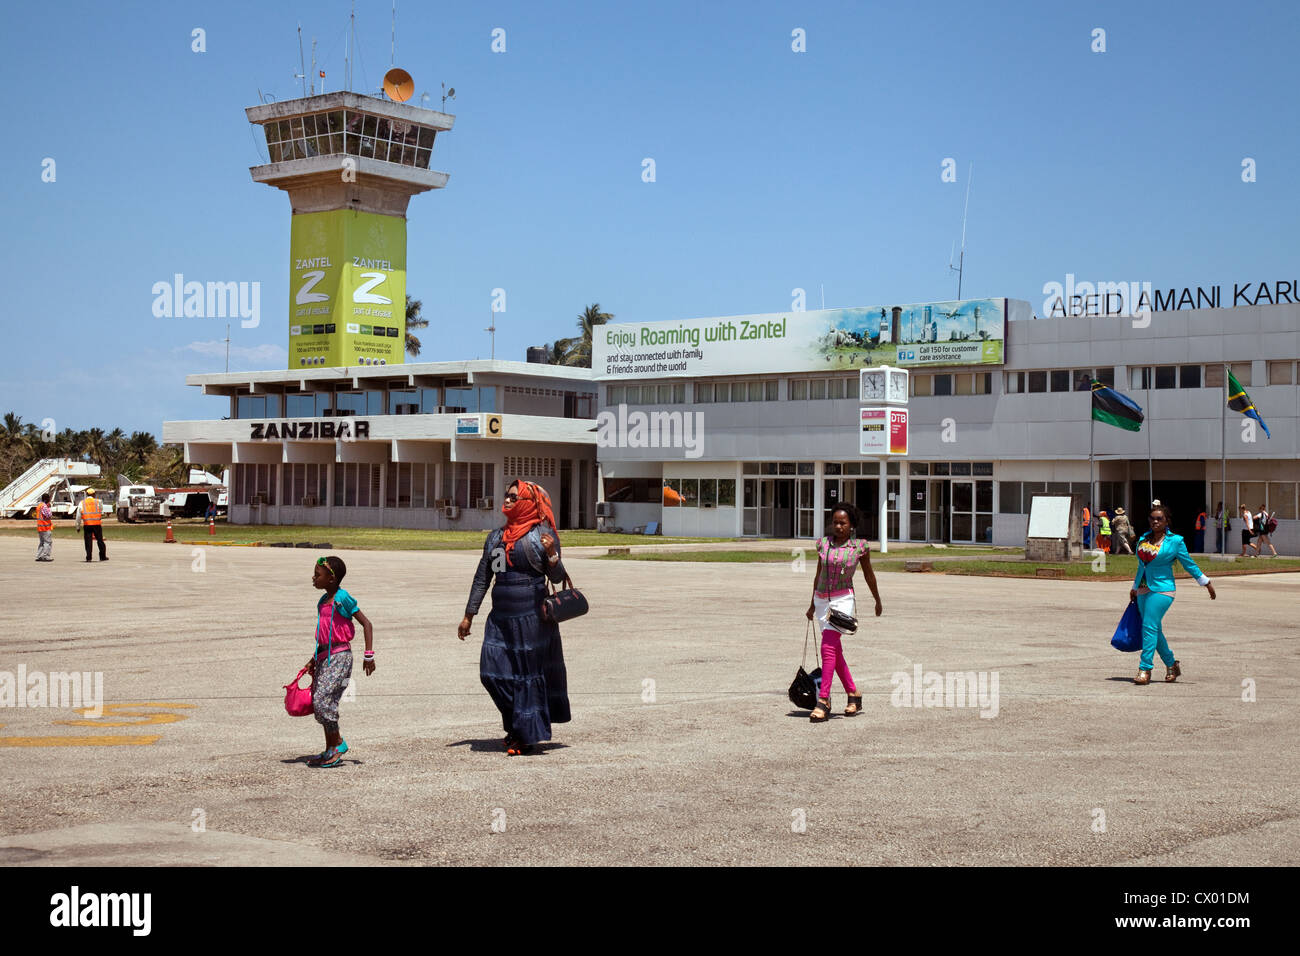 African family walking to their flight, at Abeid Amani Karume International Airport, Zanzibar airport, Zanzibar Africa Stock Photo